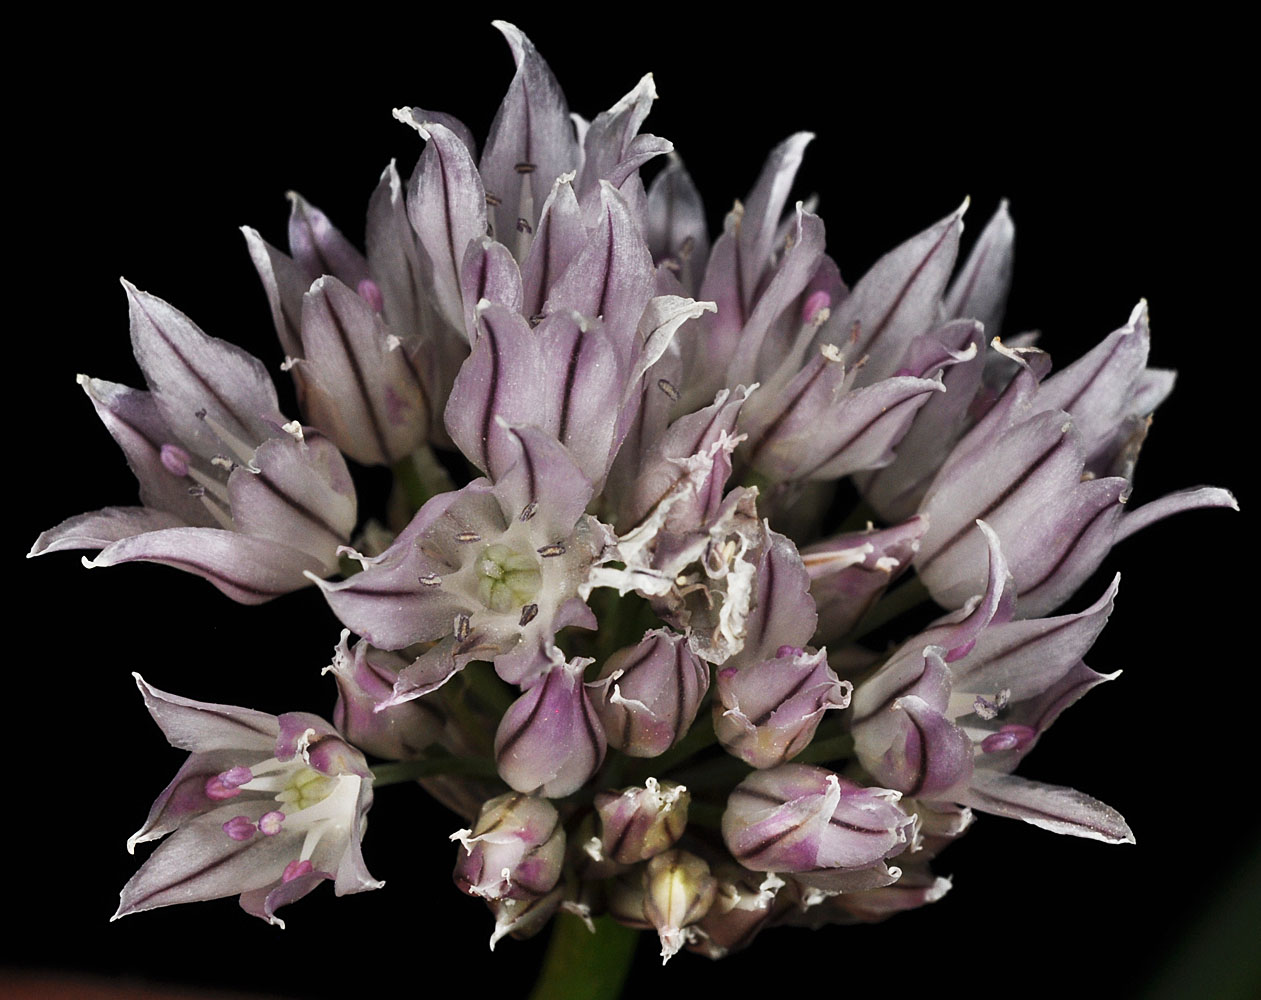 Flora of Eastern Washington Image: Allium schoenoprasum